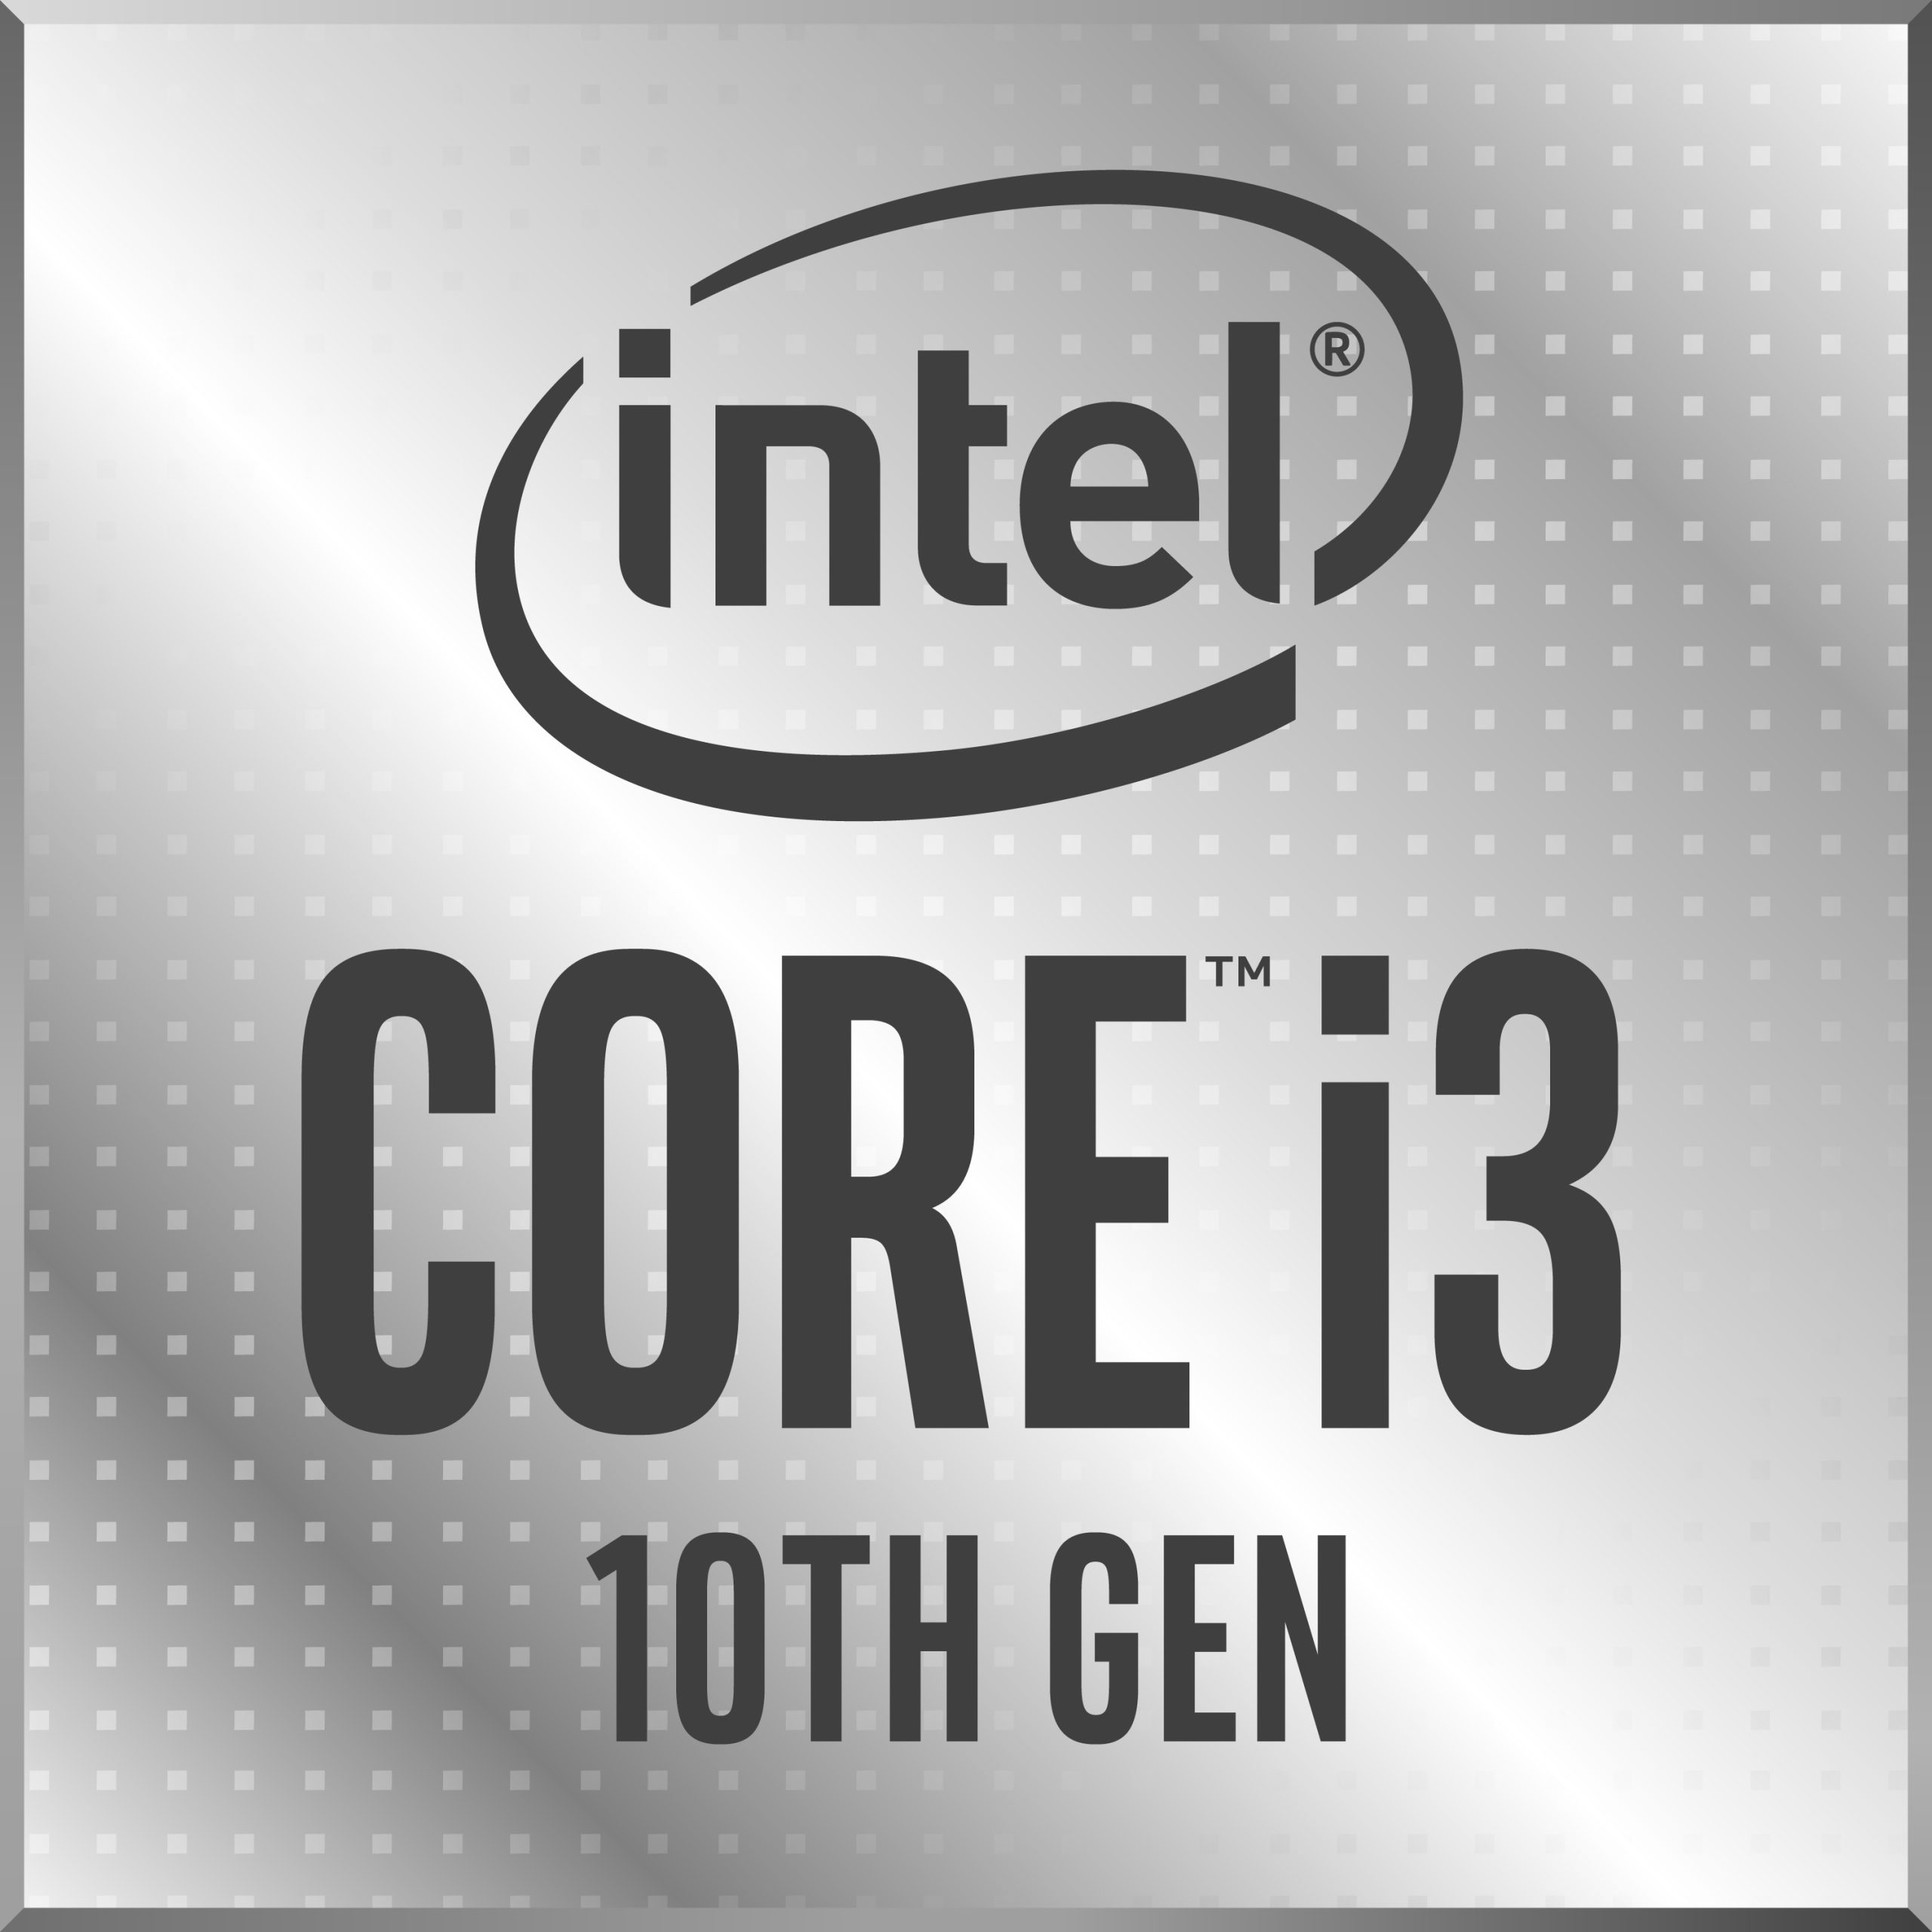 intel core i3 processor